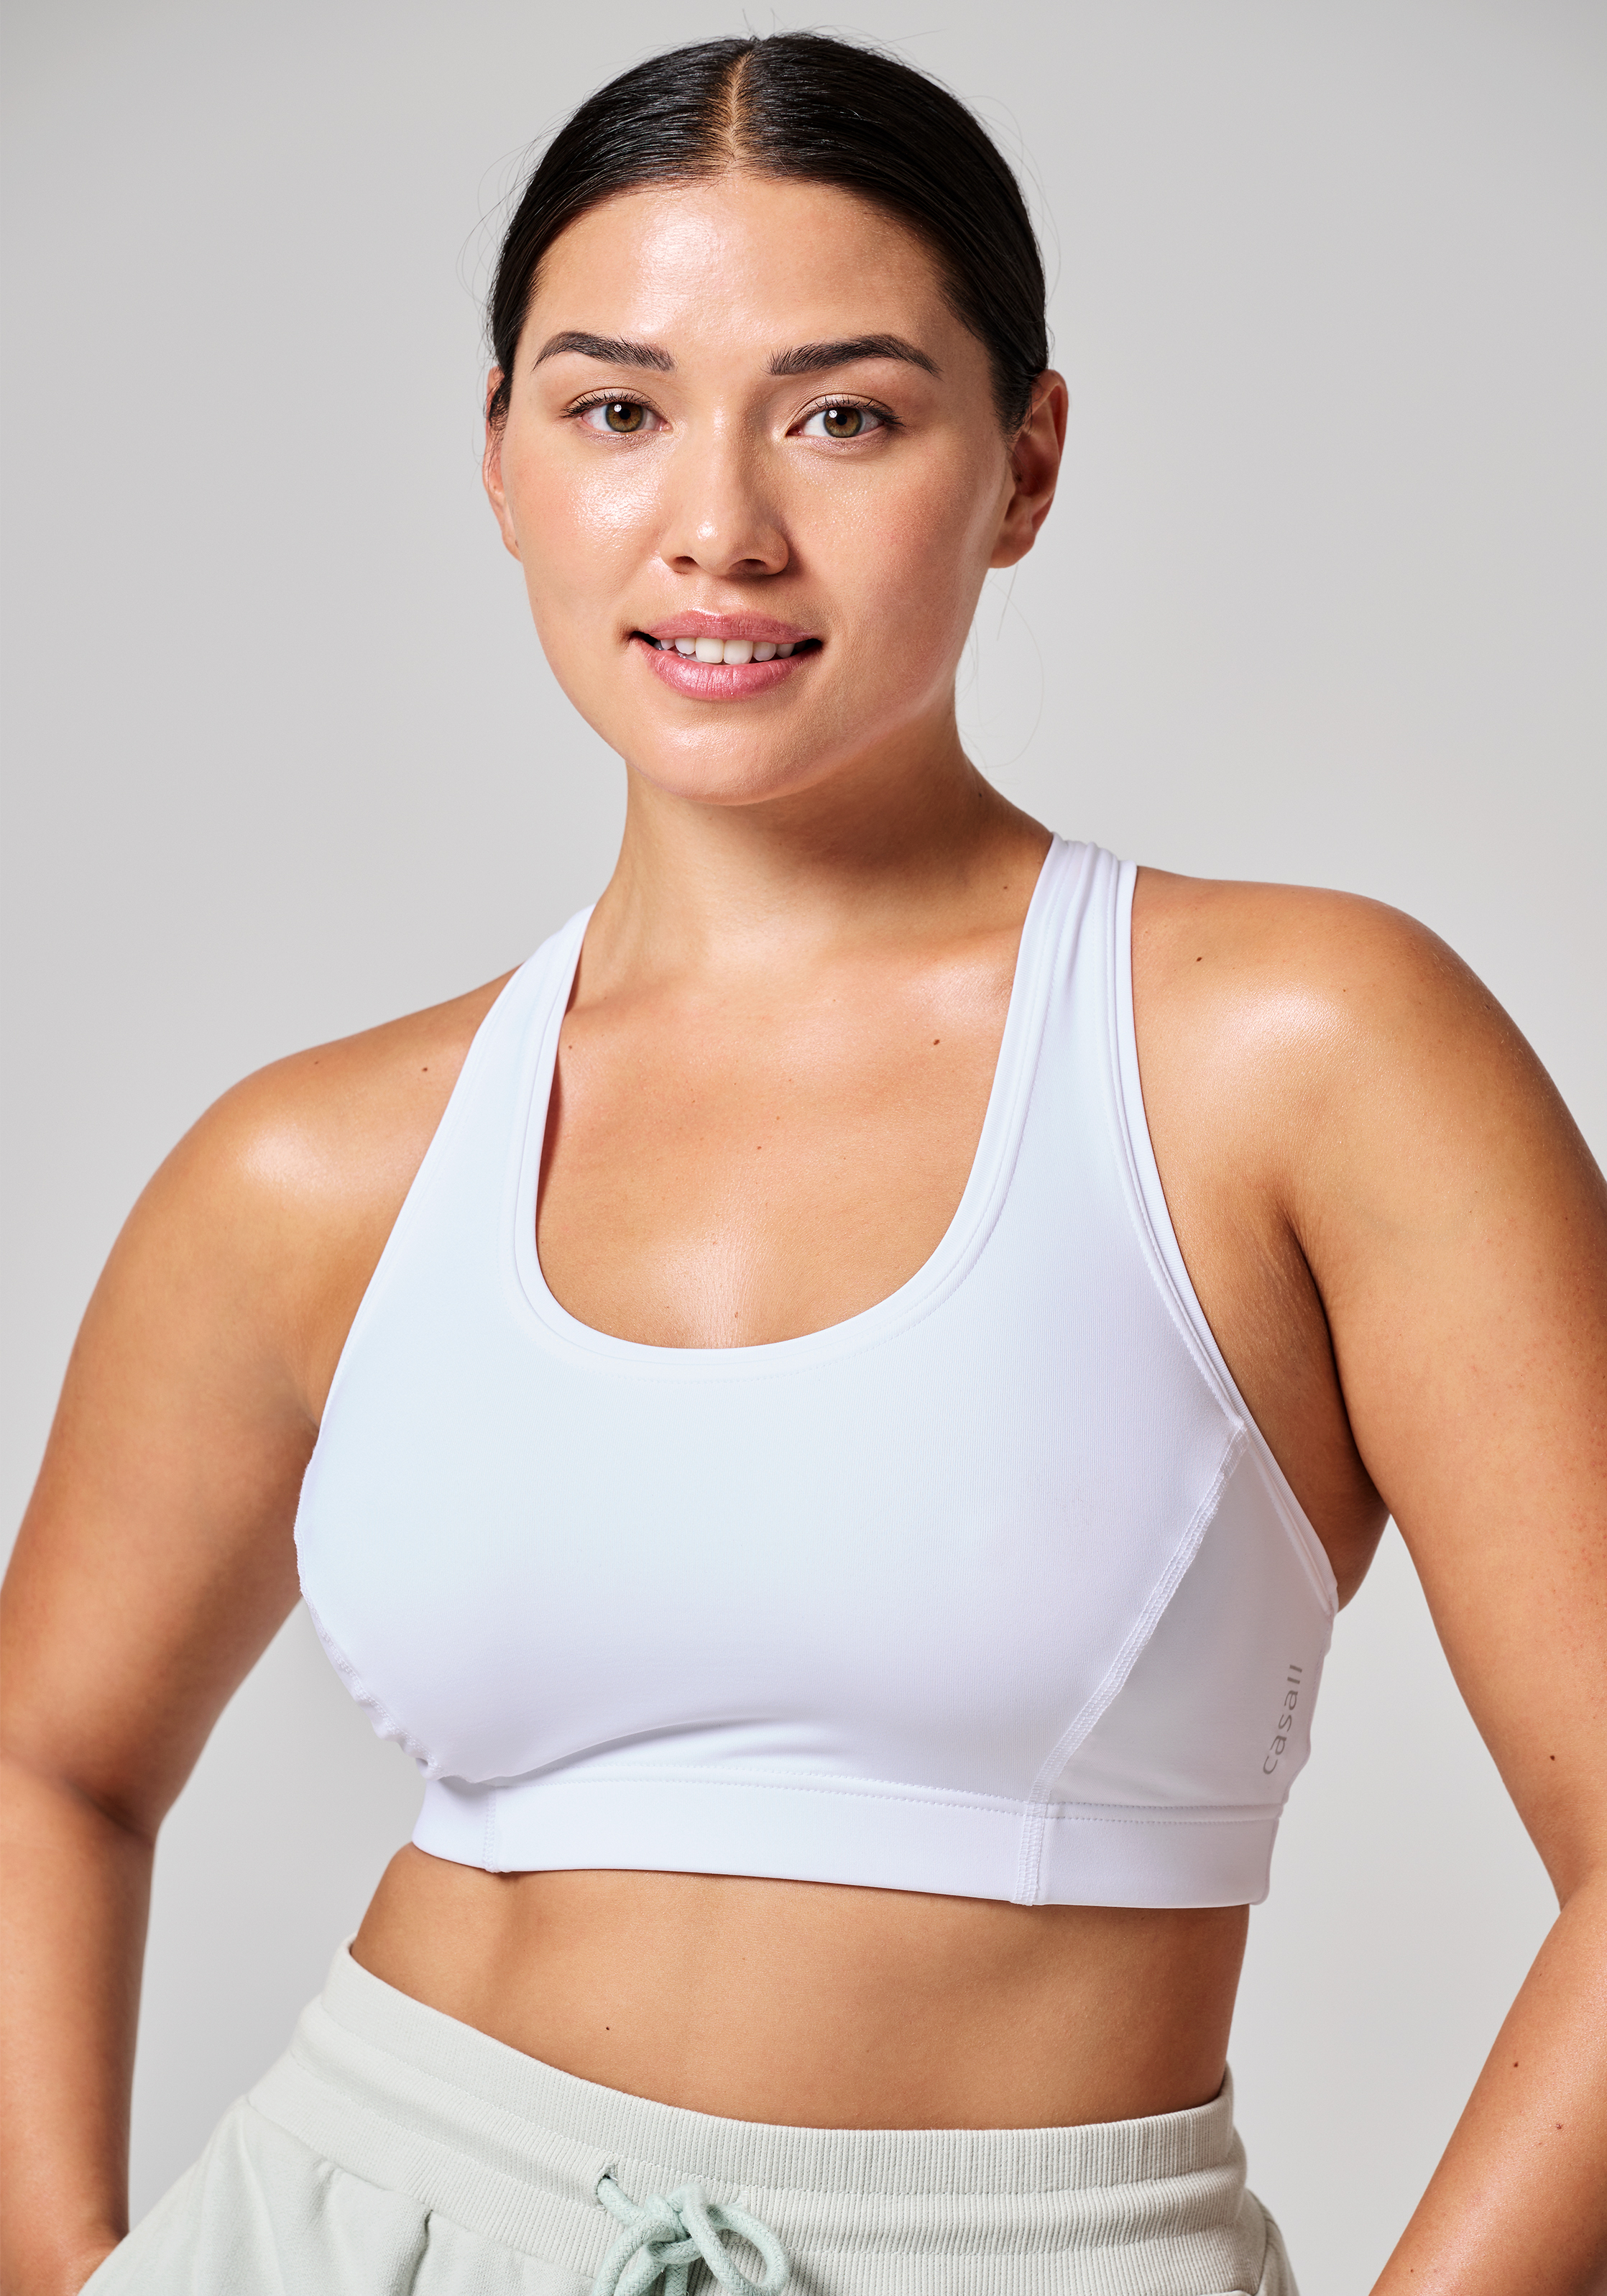 Casall Light support sports bra - white 